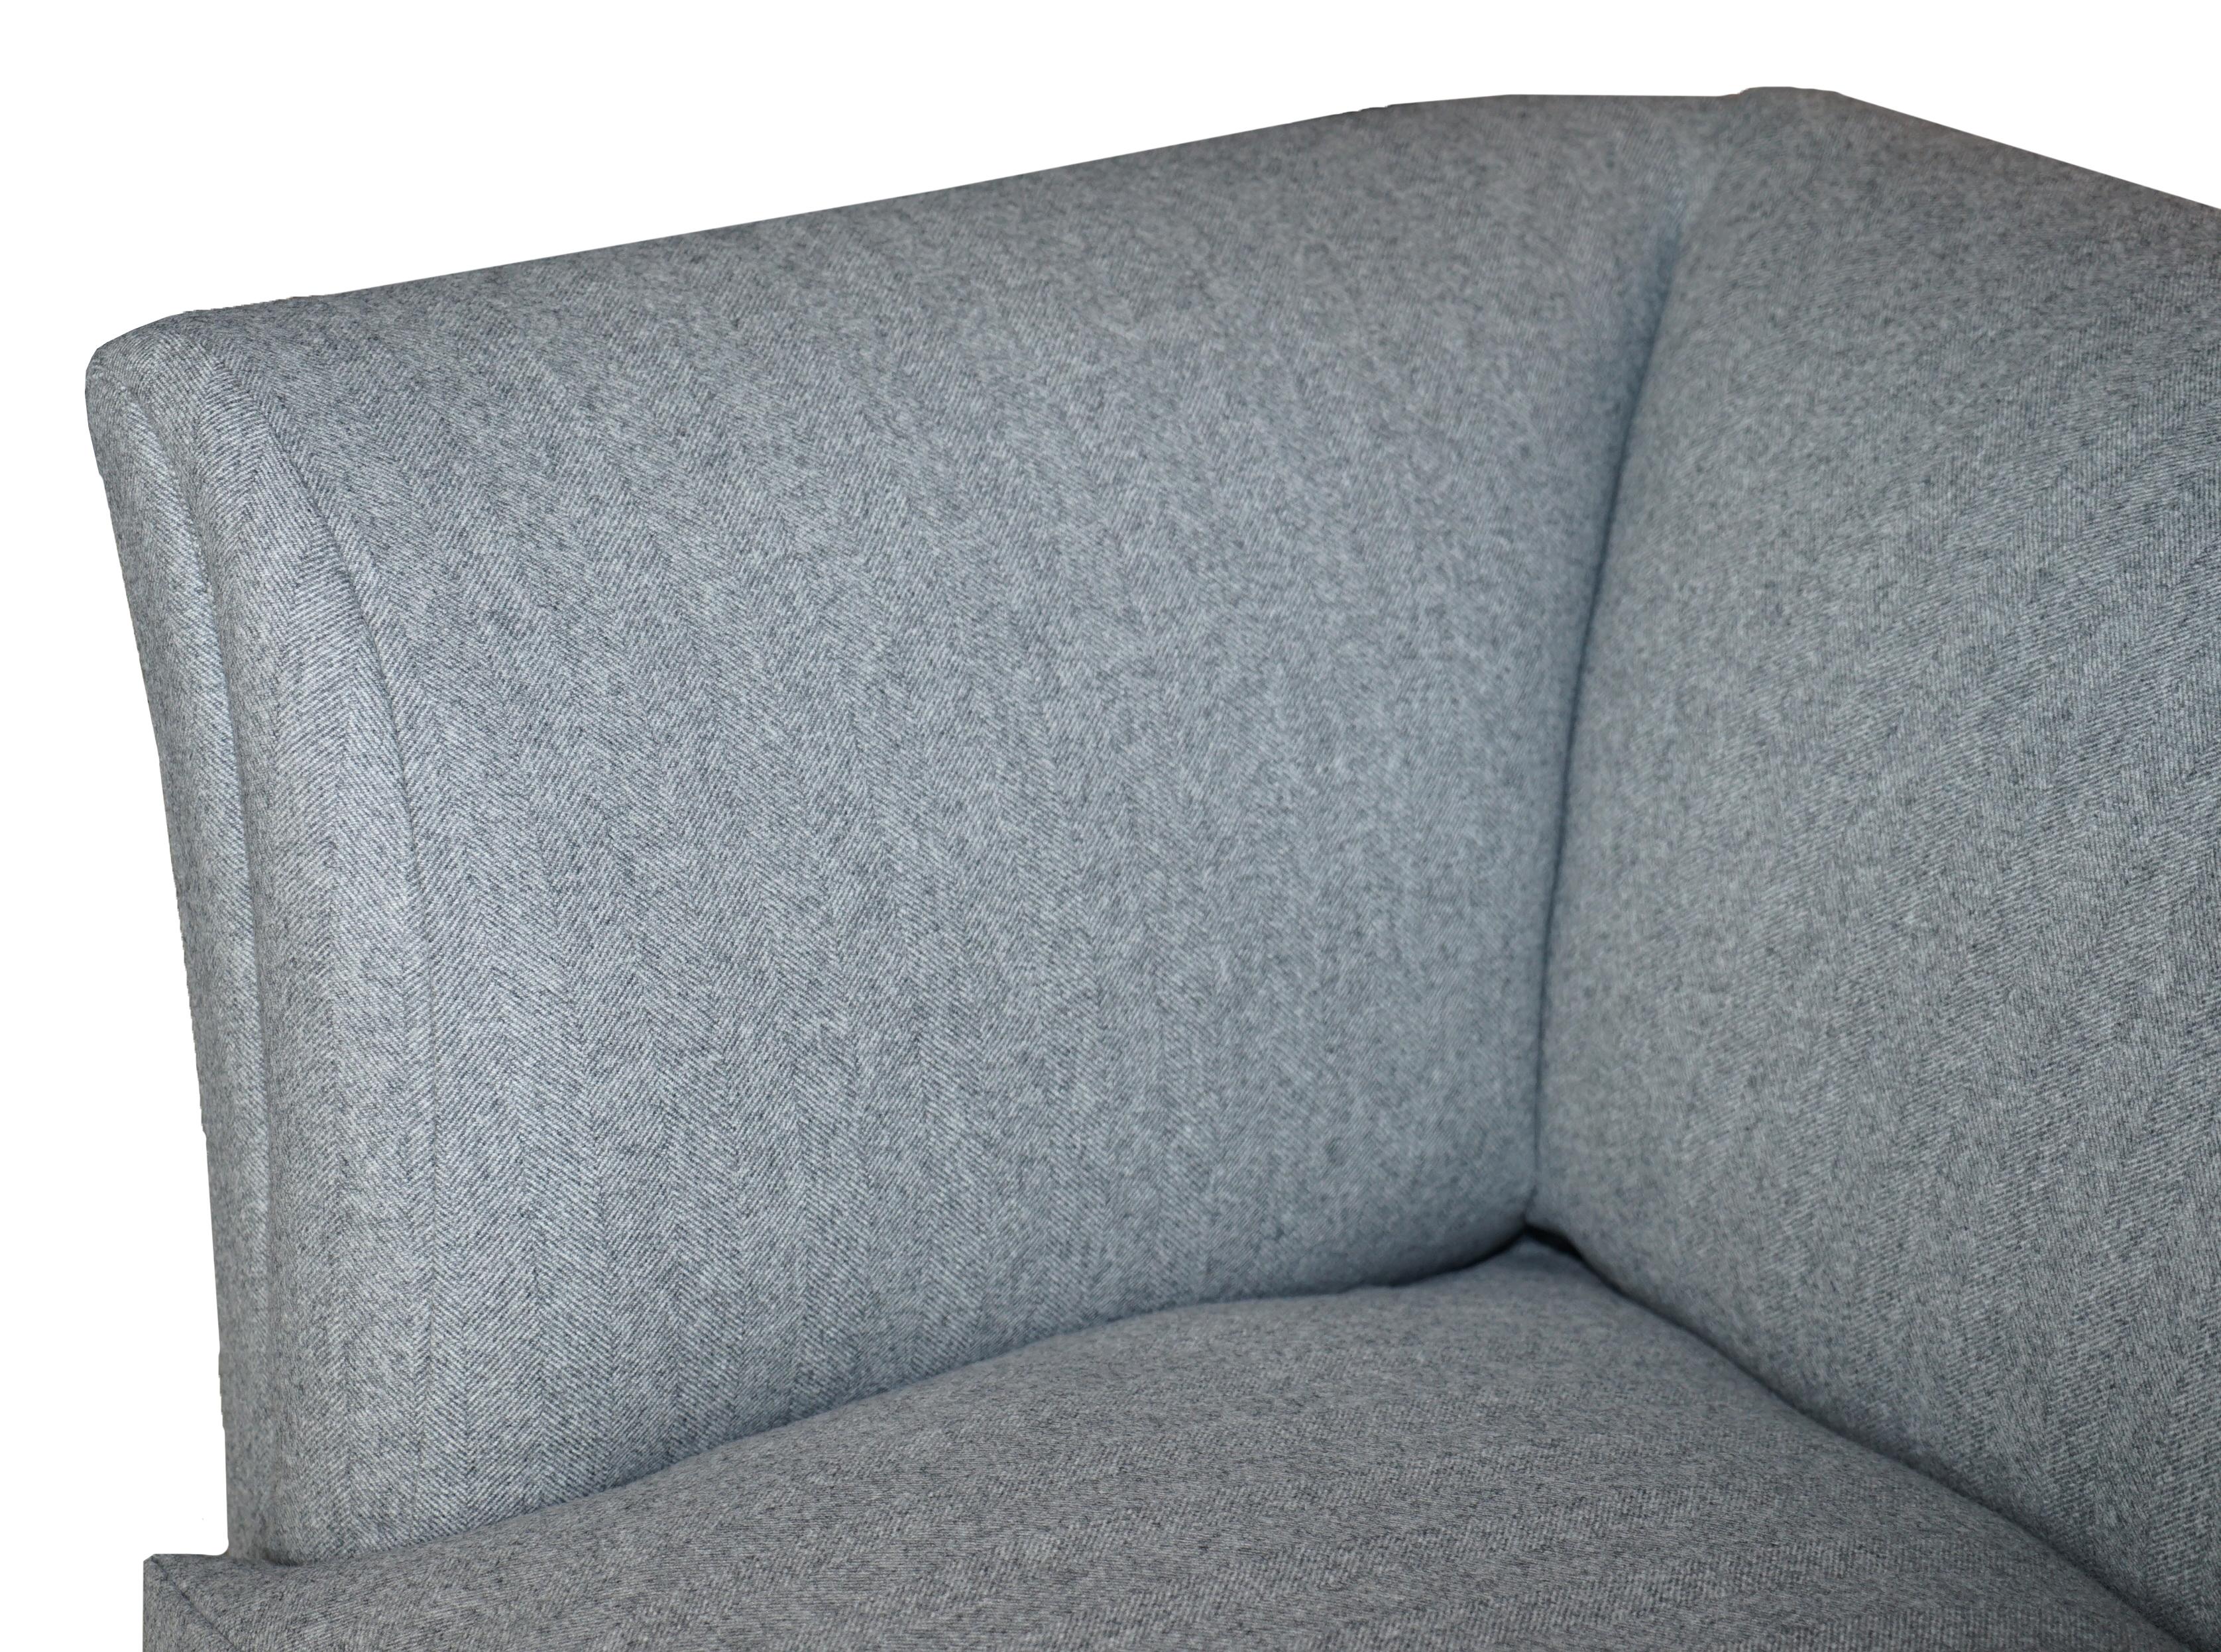 English Fully Restored Howard & Son's Baring Sofa Grey Herringbone 100% Wool Upholstery For Sale